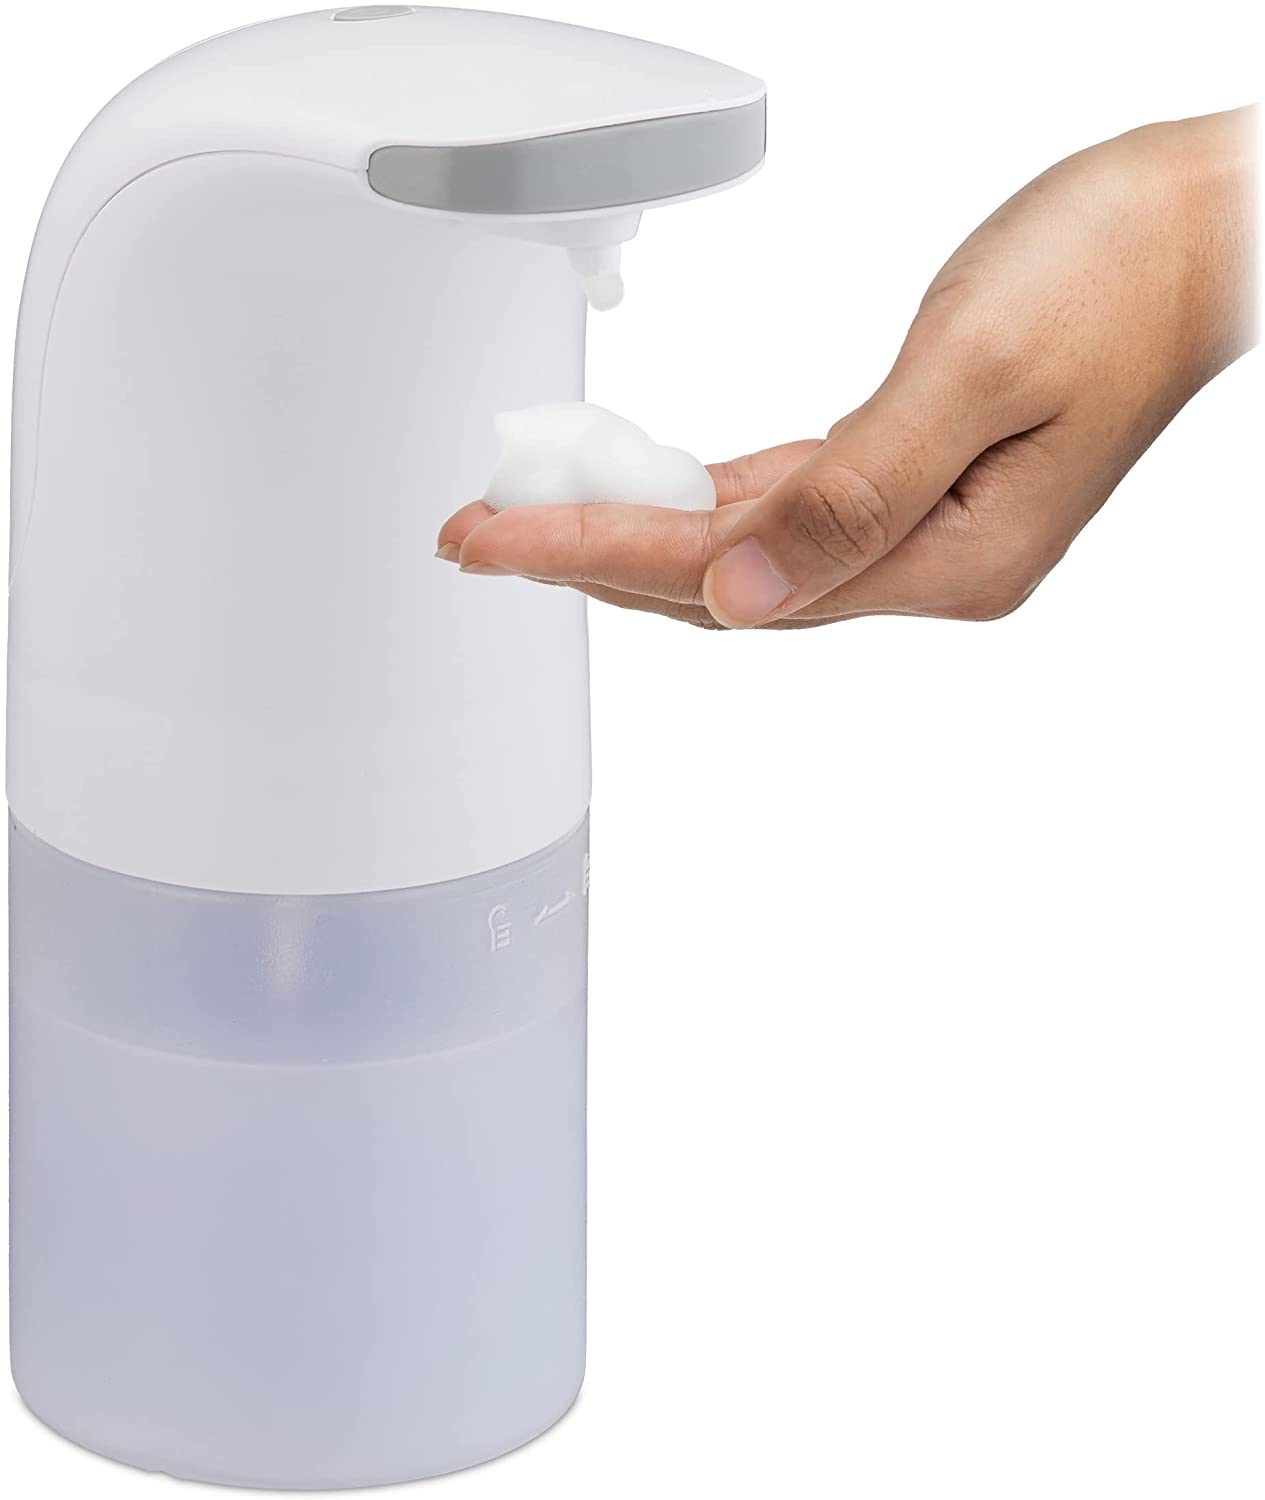 Relaxdays Automatic Soap Dispenser, Infrared Sensor, for Foam Soap & Disinfectant, Refillable, 300 ml, White